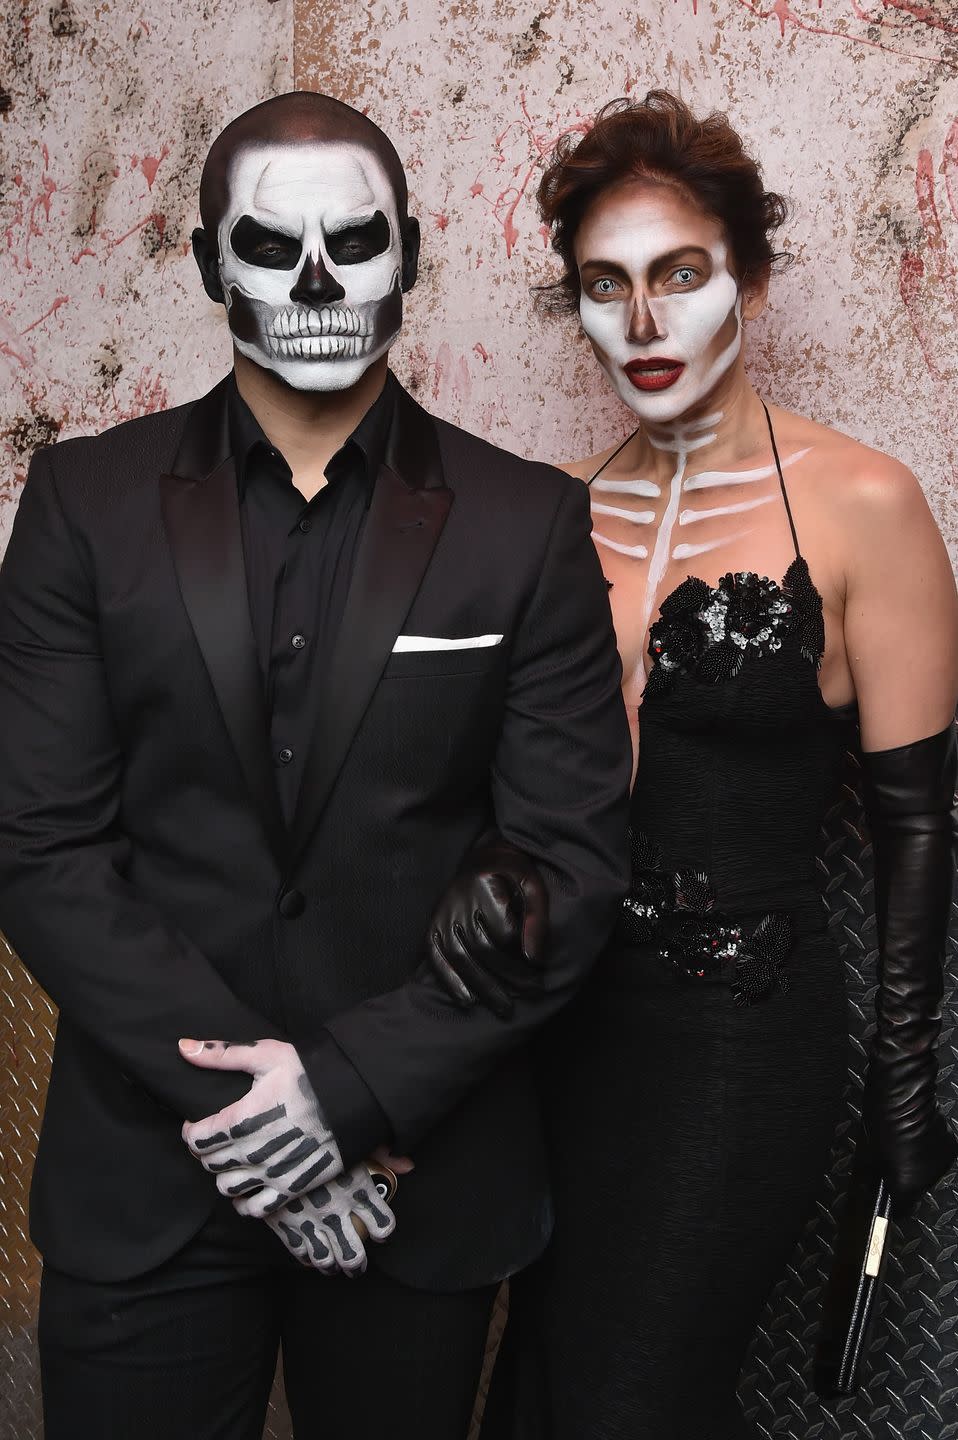 Jennifer Lopez and Casper Smart As Skeletons